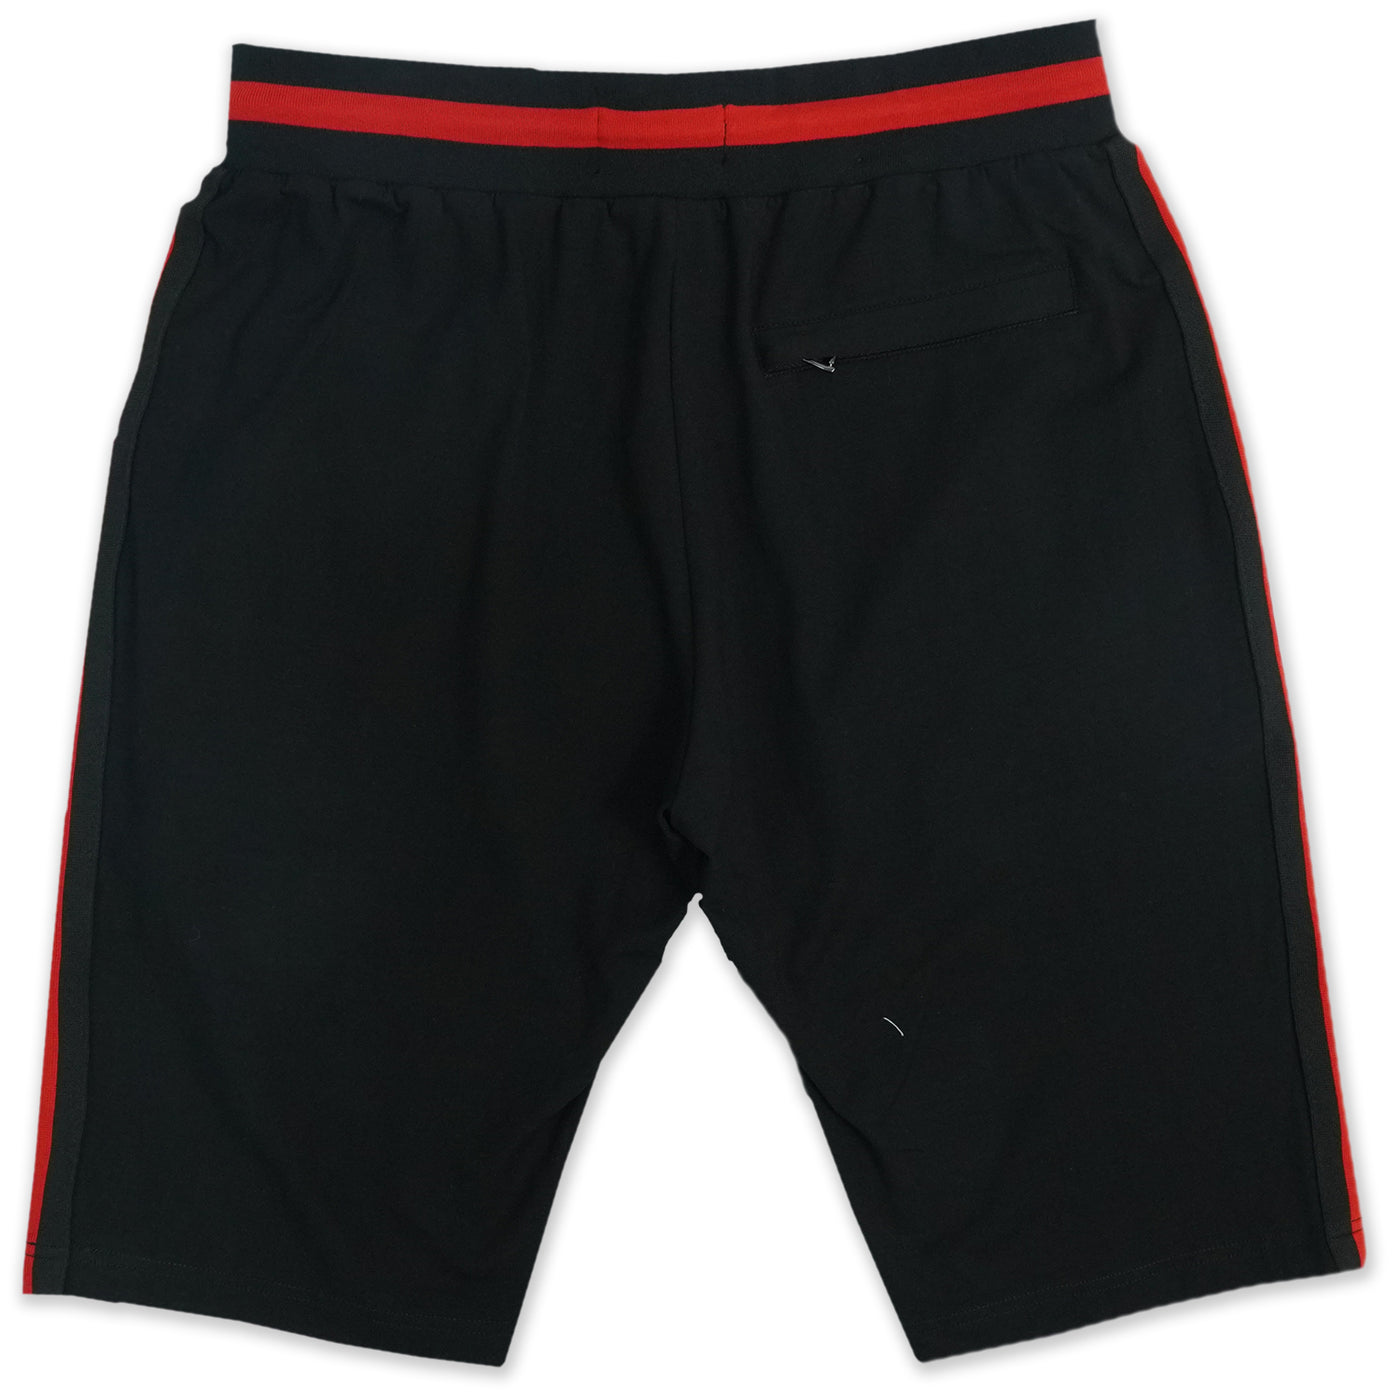 M600 Knit Shorts - Black